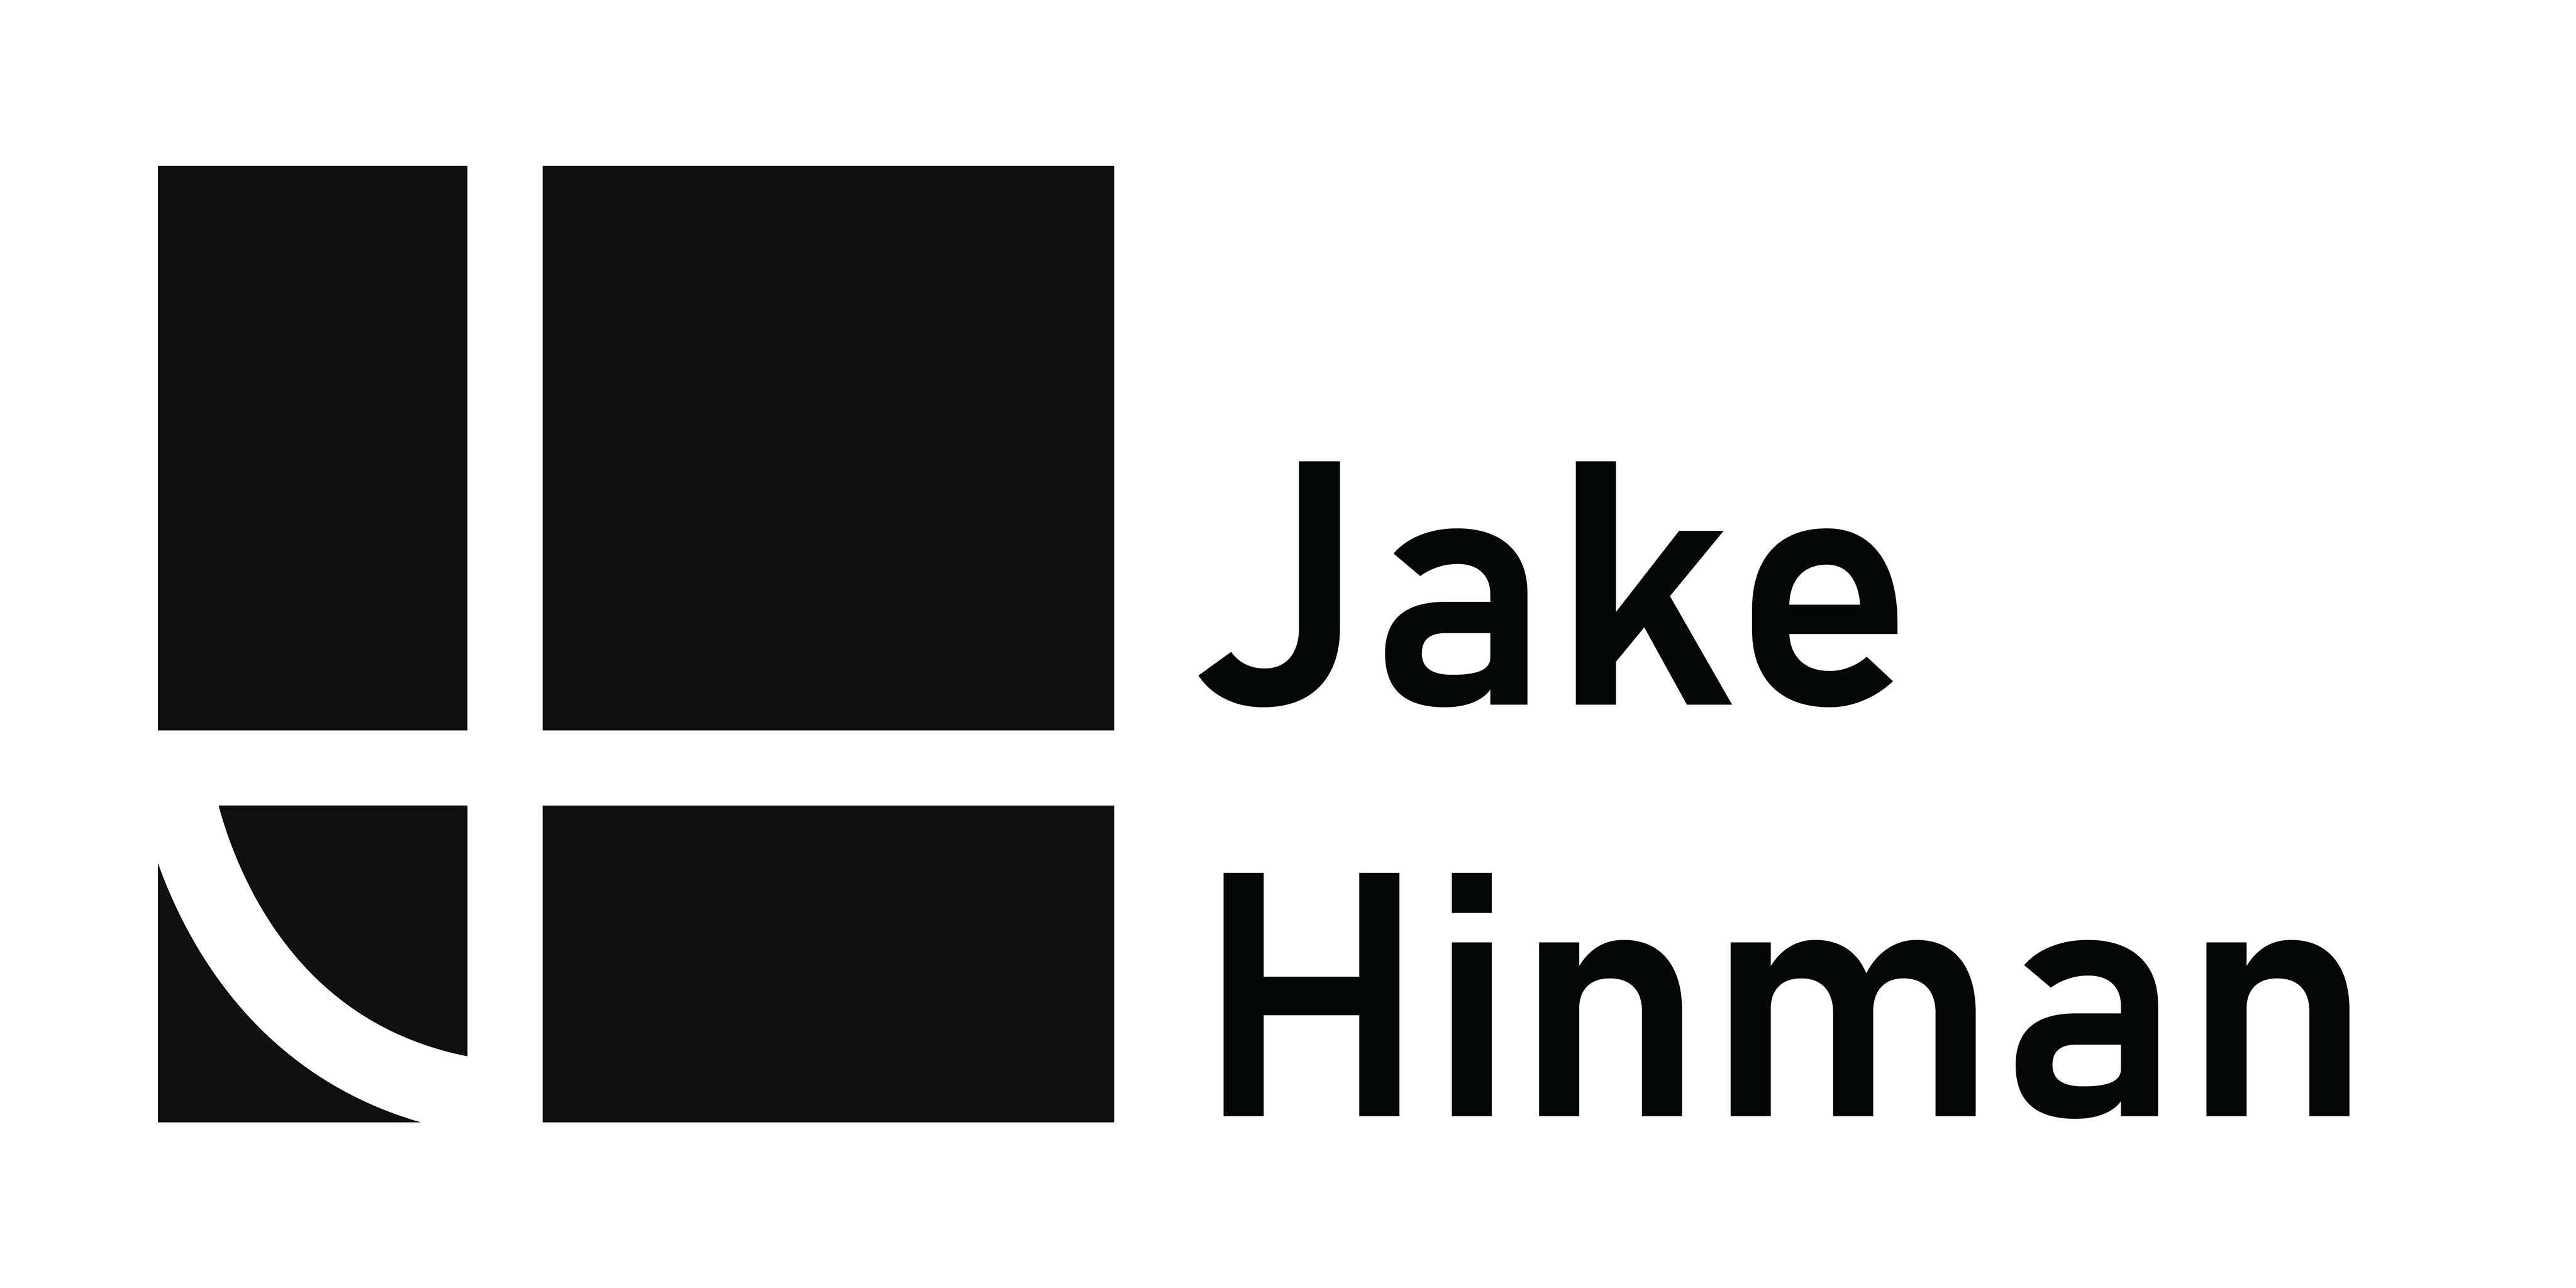  JAKE HINMAN